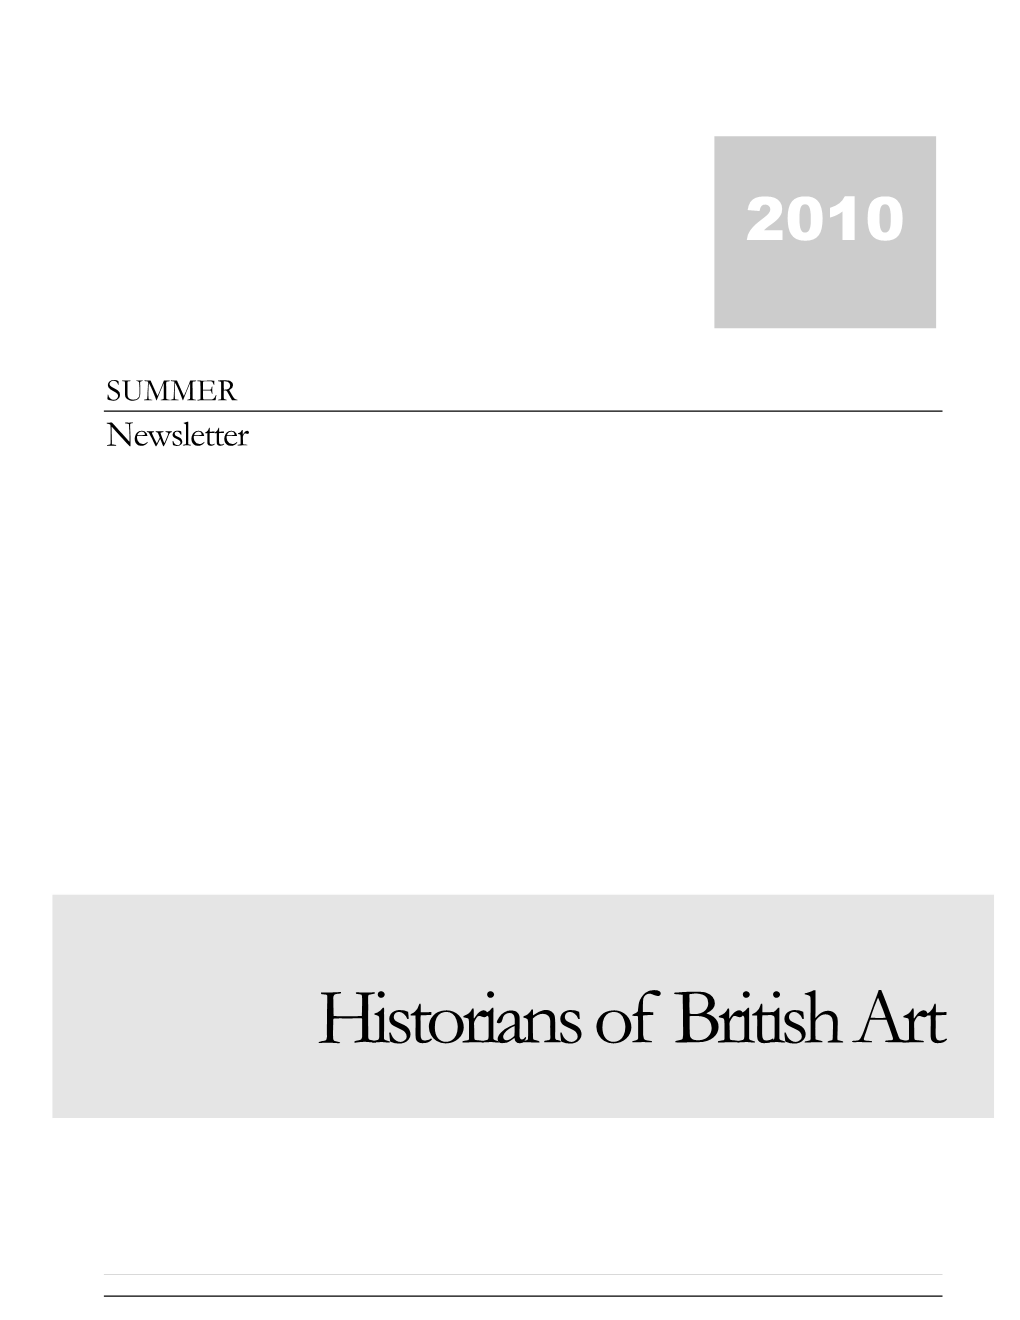 Historians of British Art